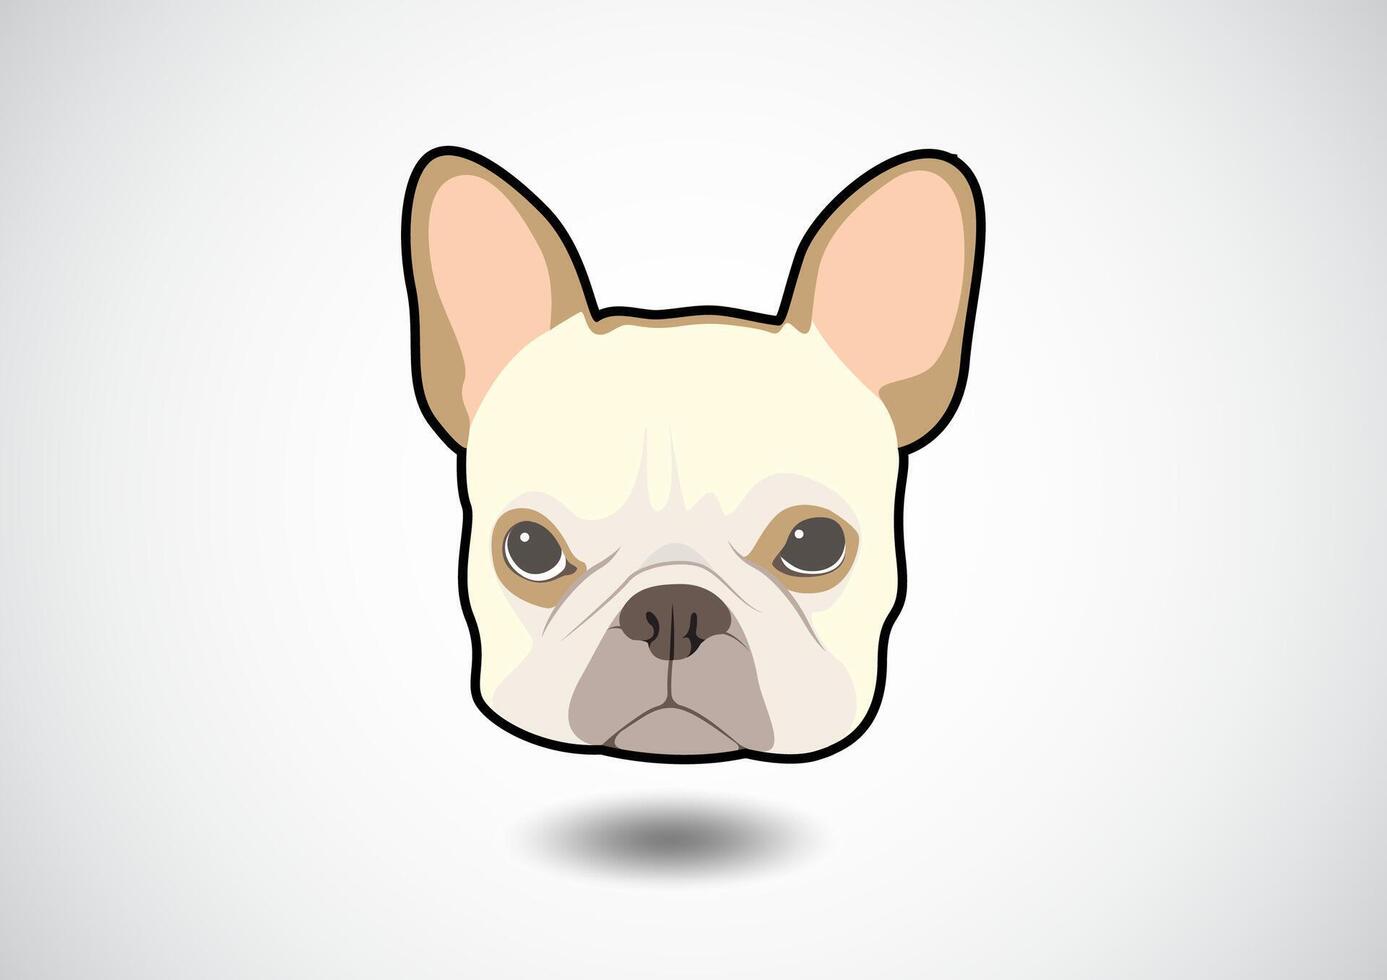 Angry Cute French Bulldog Face vector